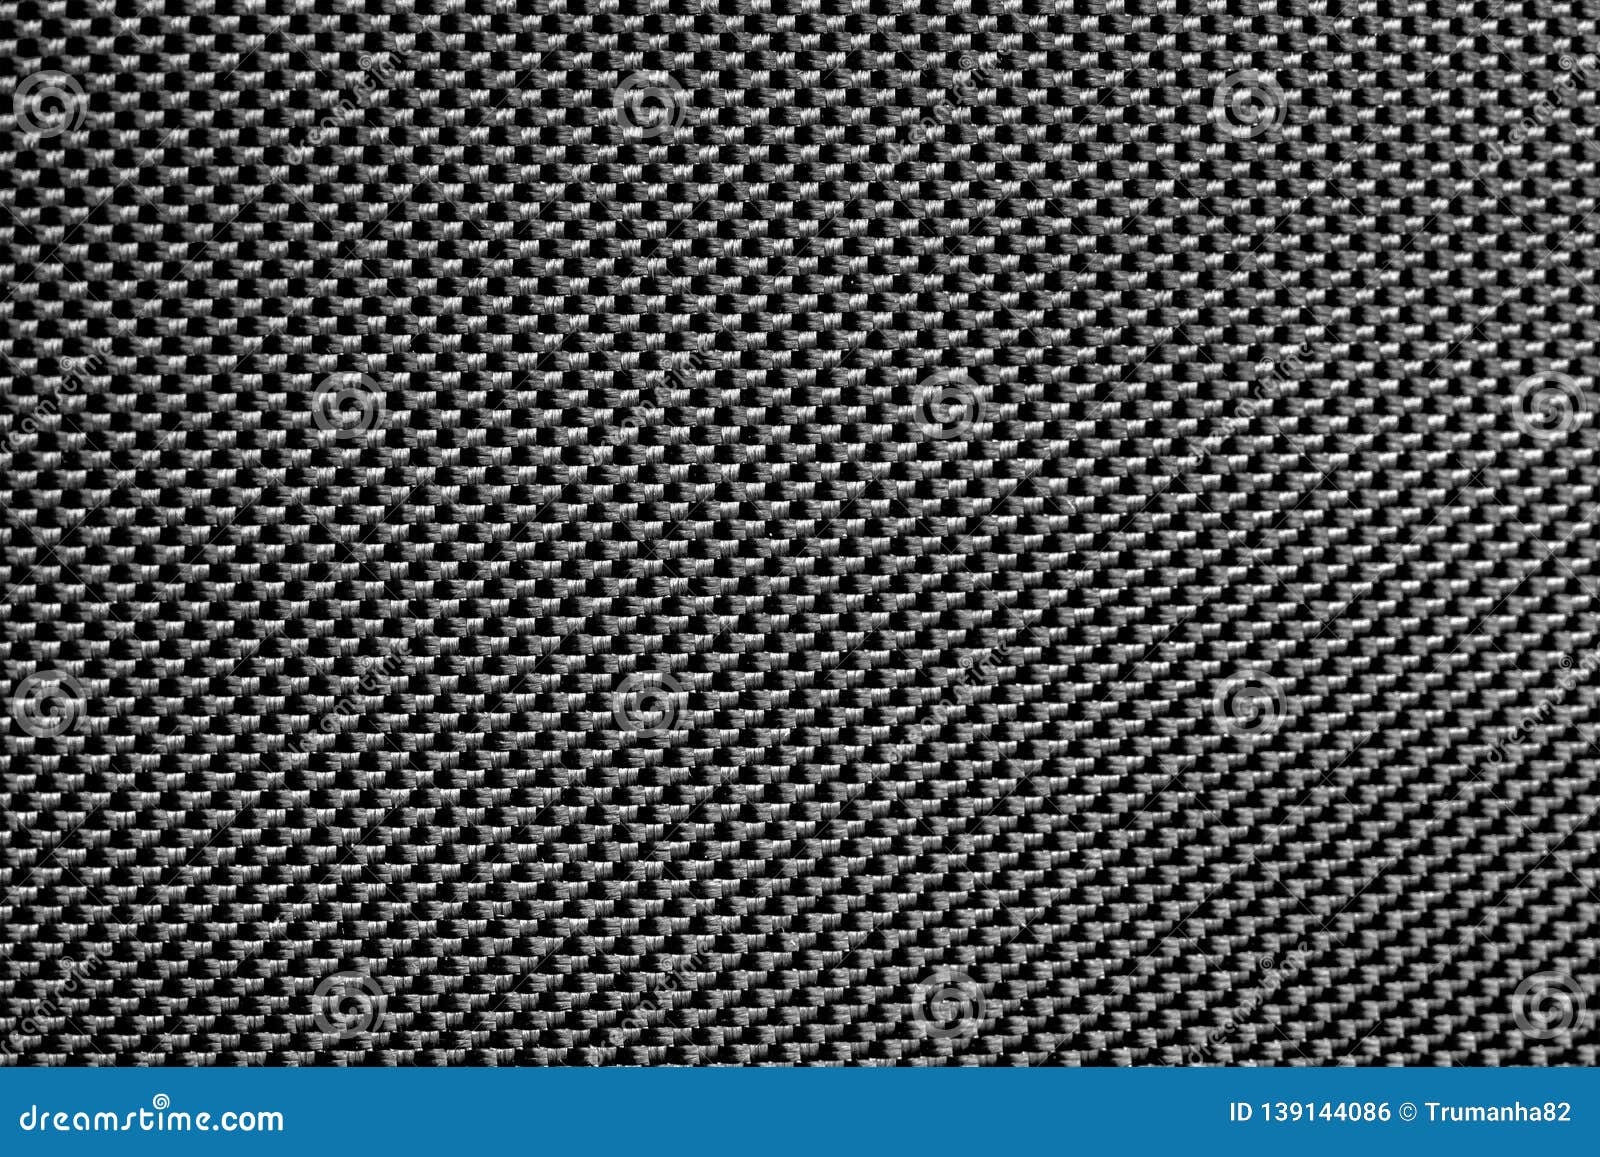 seamless texture of grey carbon fibers